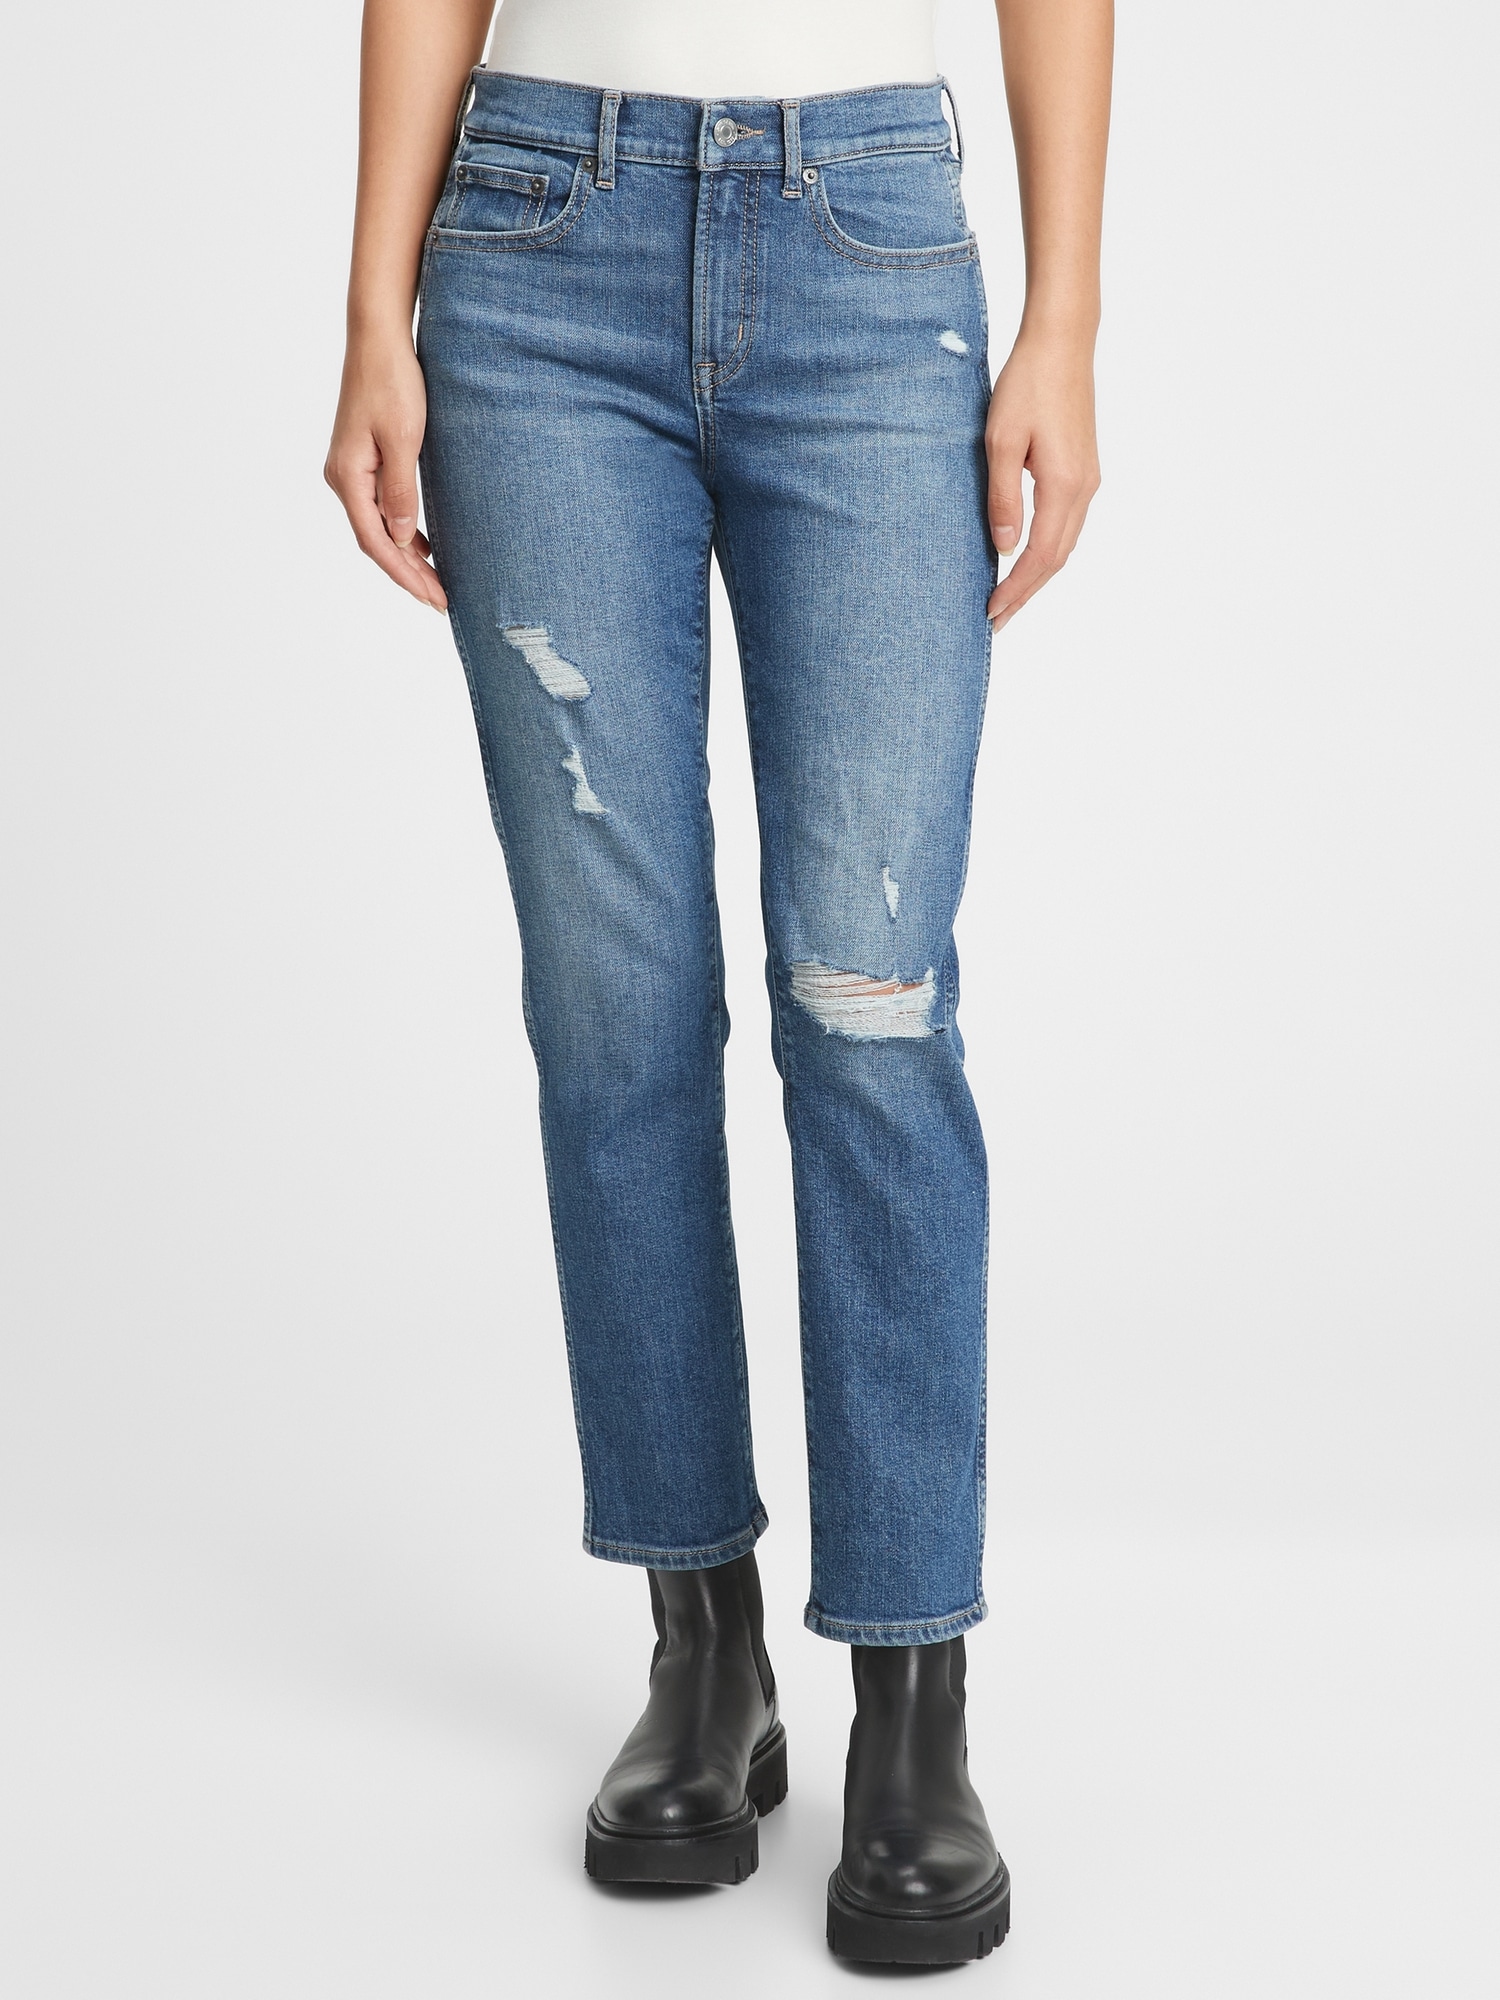 GAP Jeans Womens 30/10 Medium Indigo Vintage Slim Sky High Rise